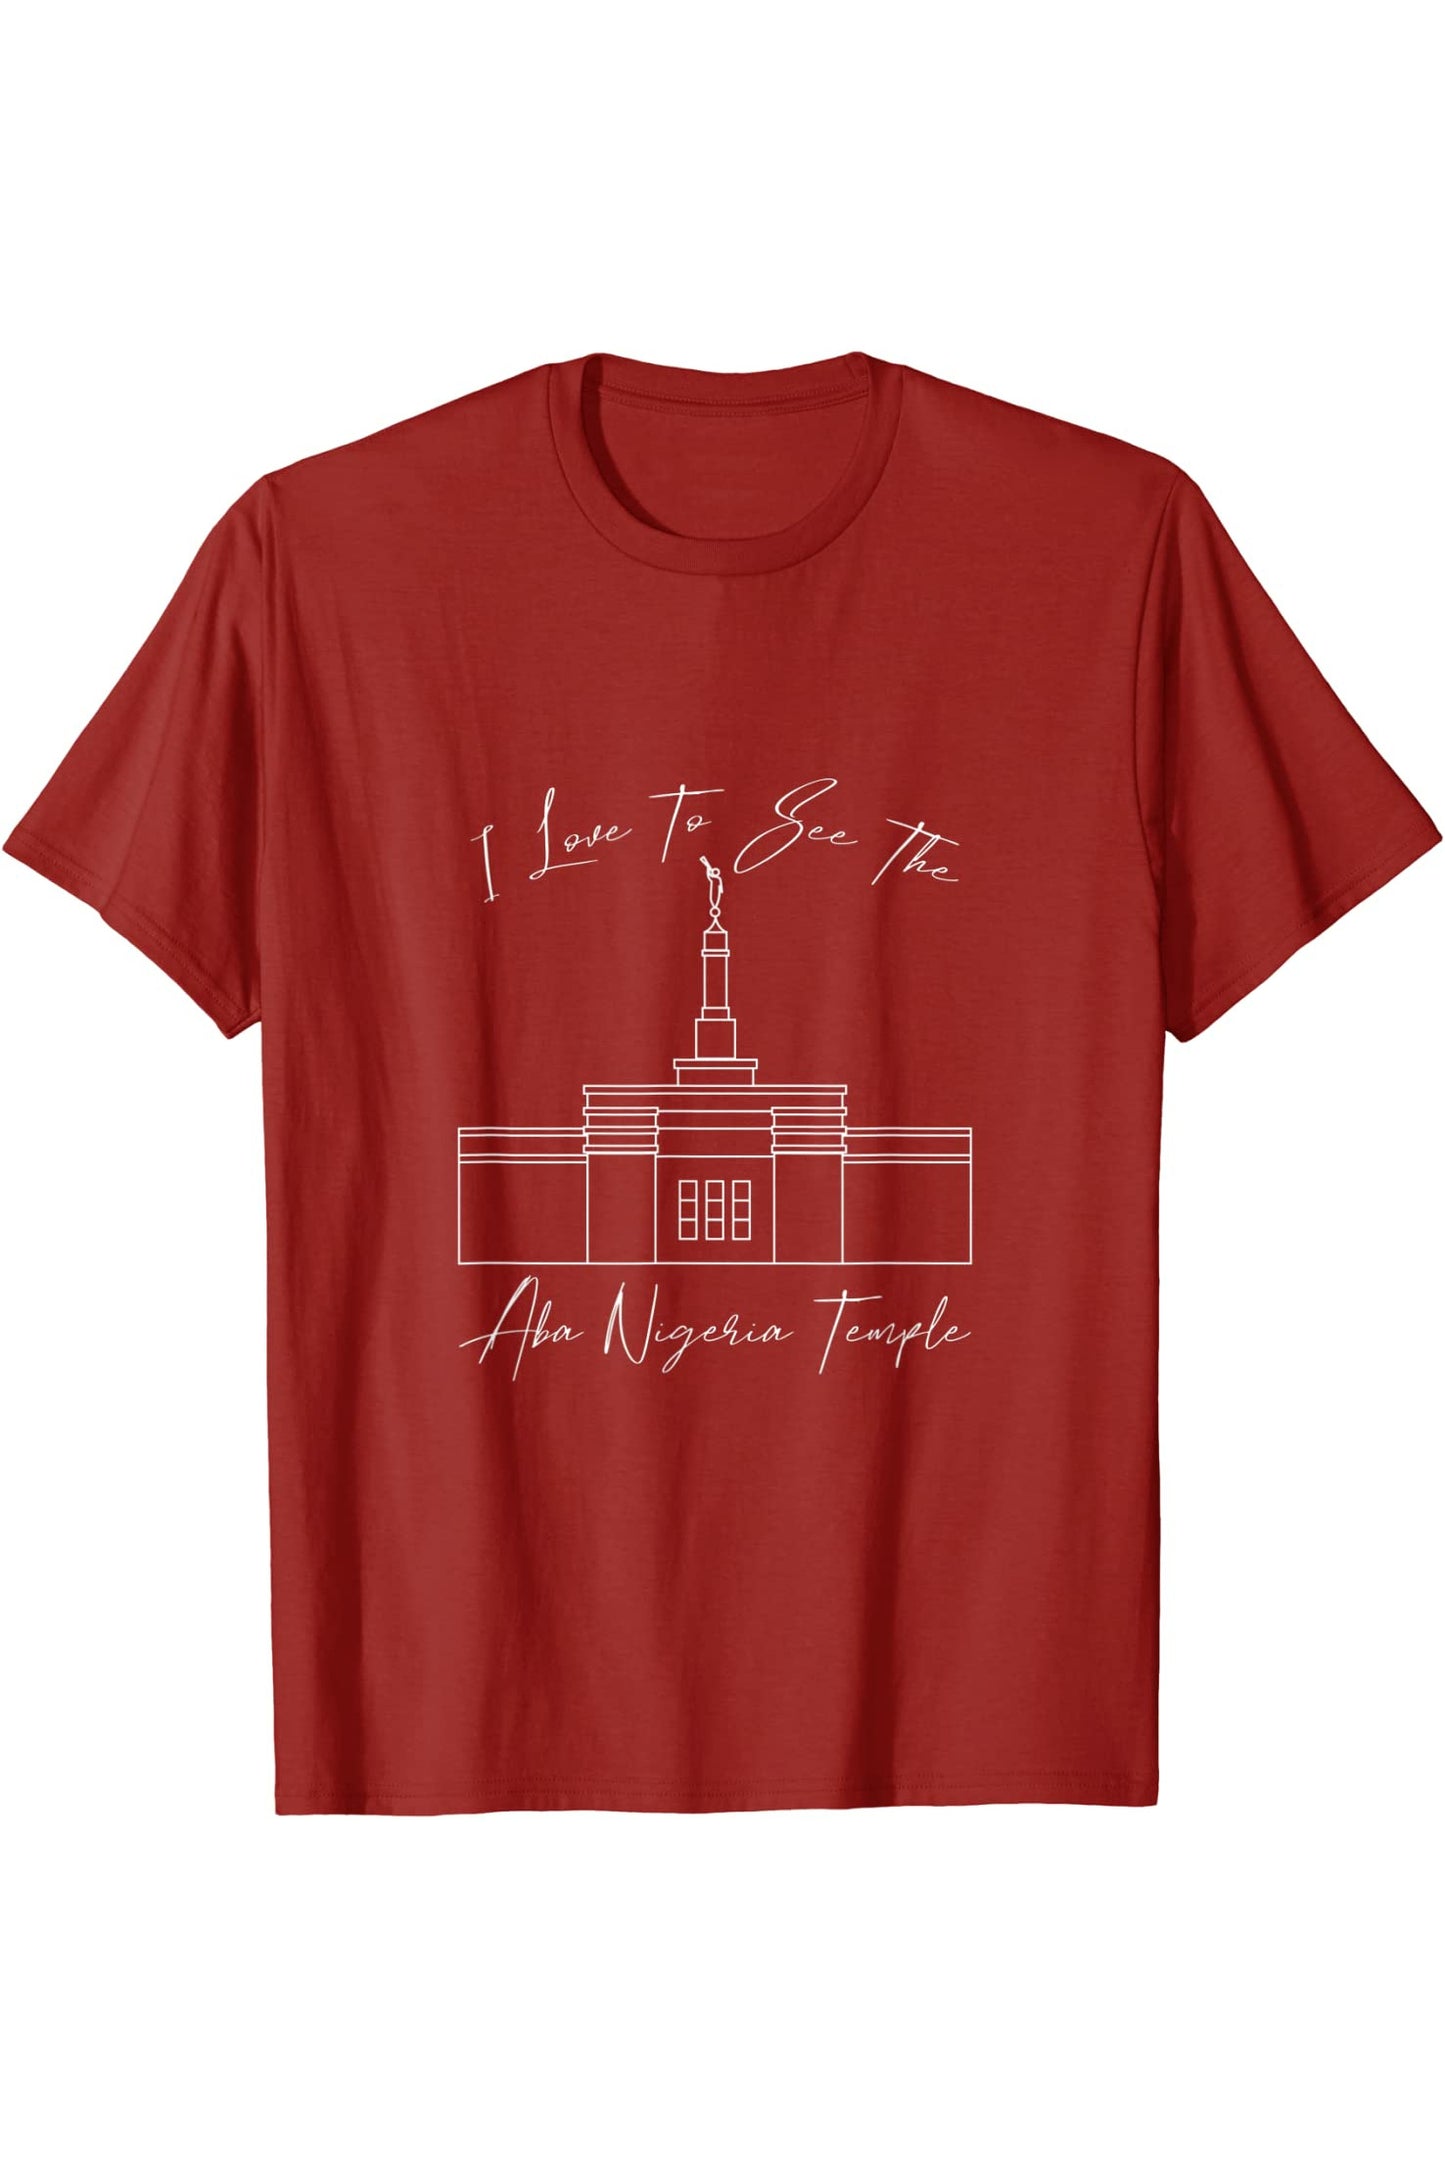 Aba Nigeria Temple T-Shirt - Calligraphy Style (English) US